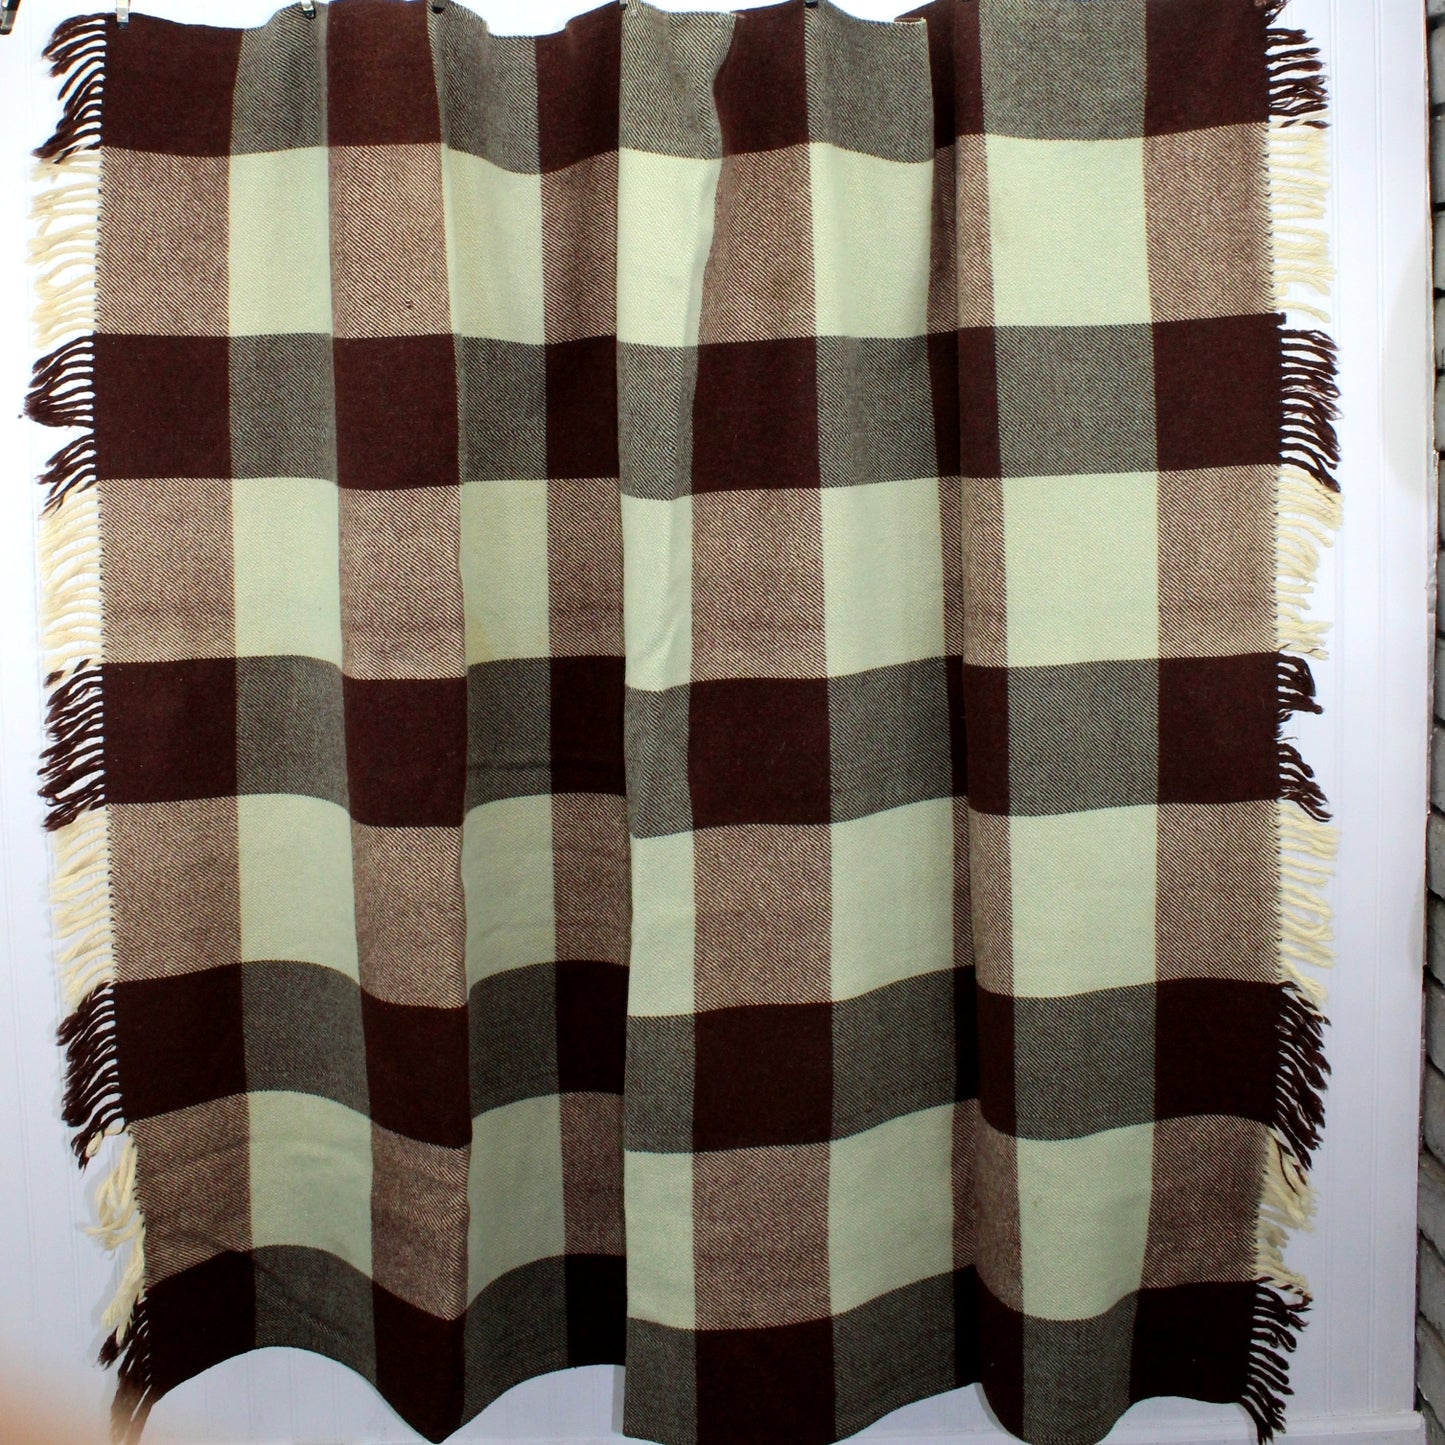 Rare Older Wool Big Check Throw Blanket Brown Seafoam Flying Carpet Label MAP total photo hanging blanket